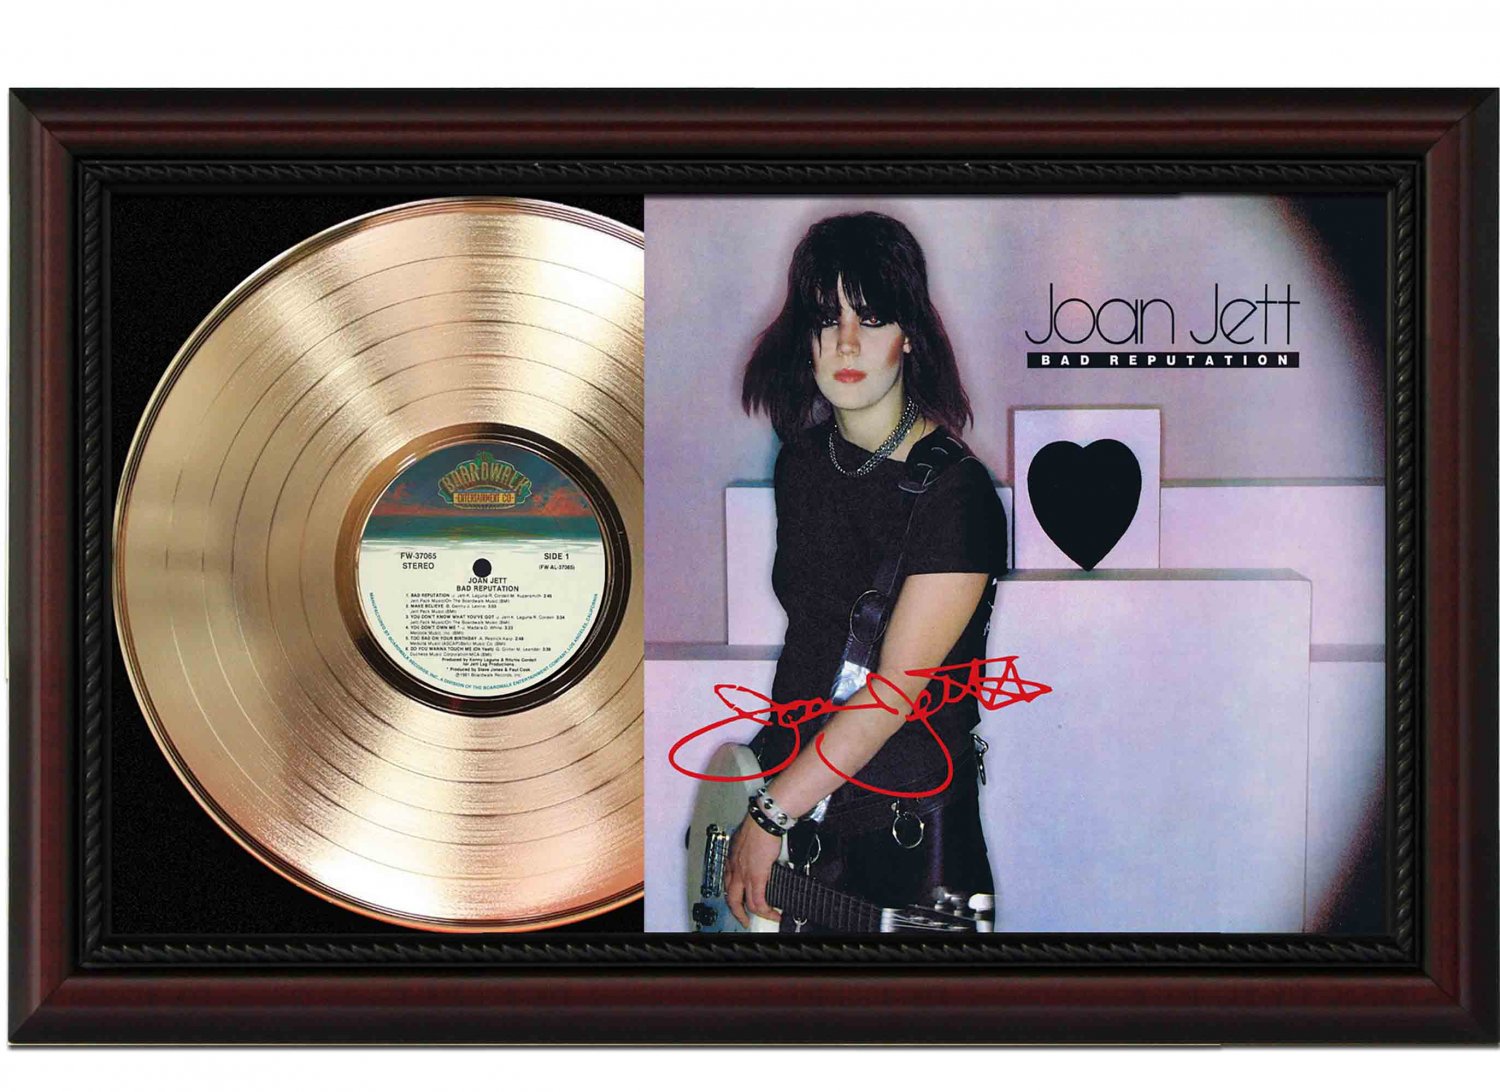 JOAN JETT "Bad Reputation" Framed Record Display.